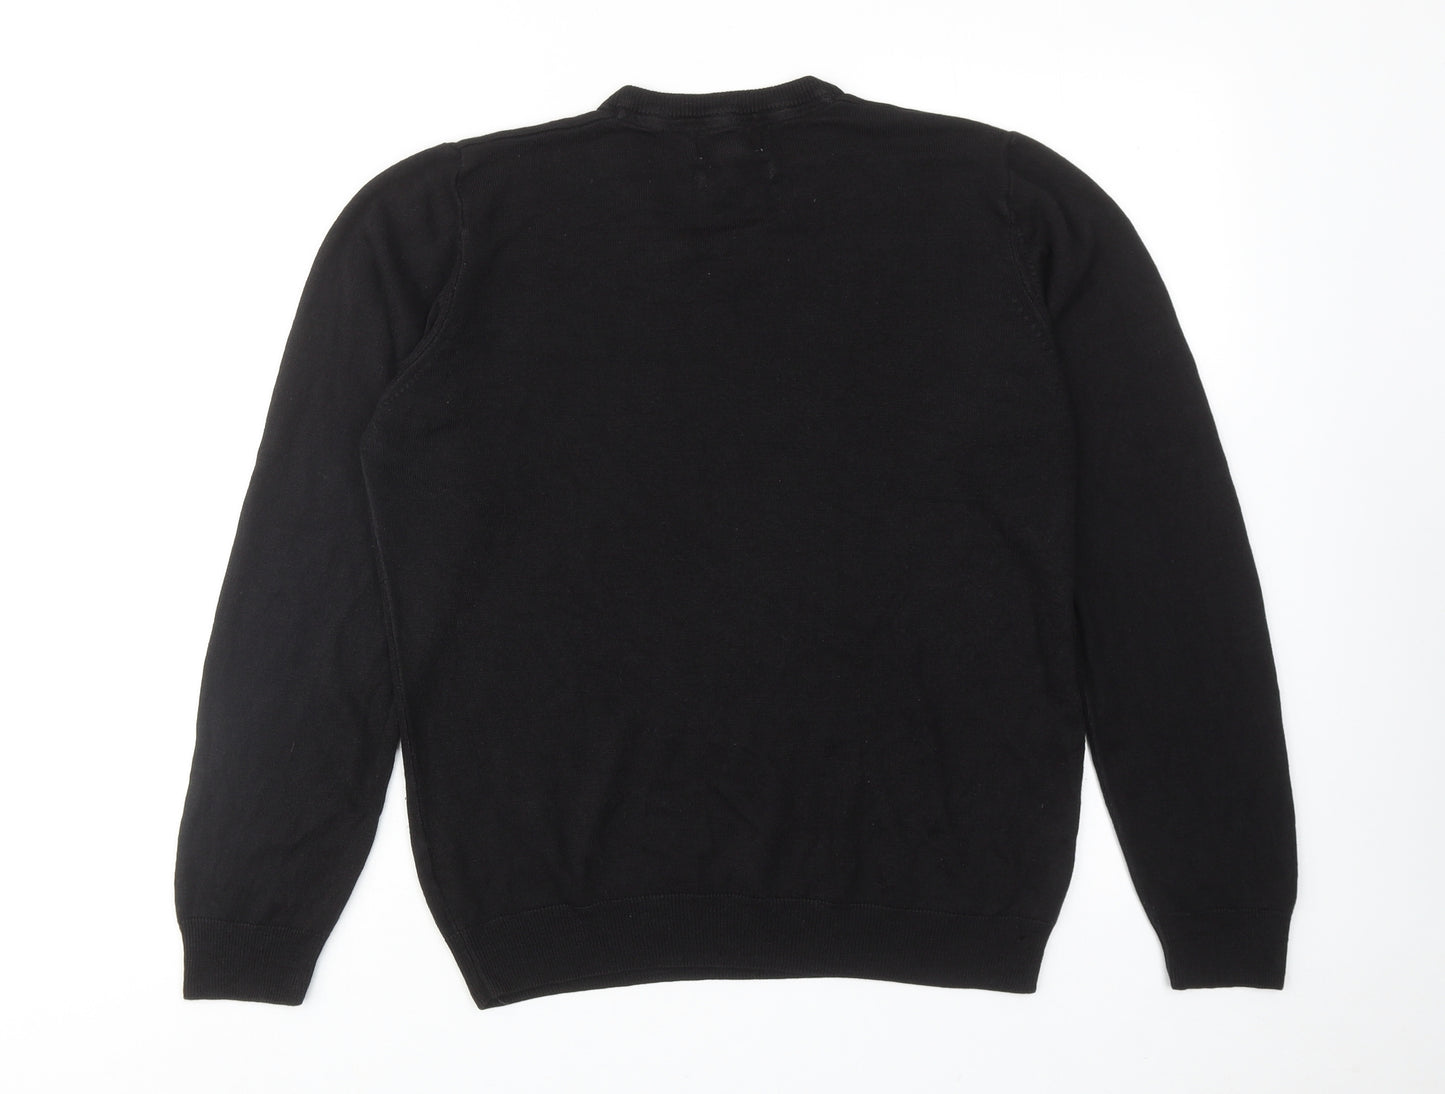 Marks and Spencer Mens Black V-Neck Acrylic Pullover Jumper Size M Long Sleeve